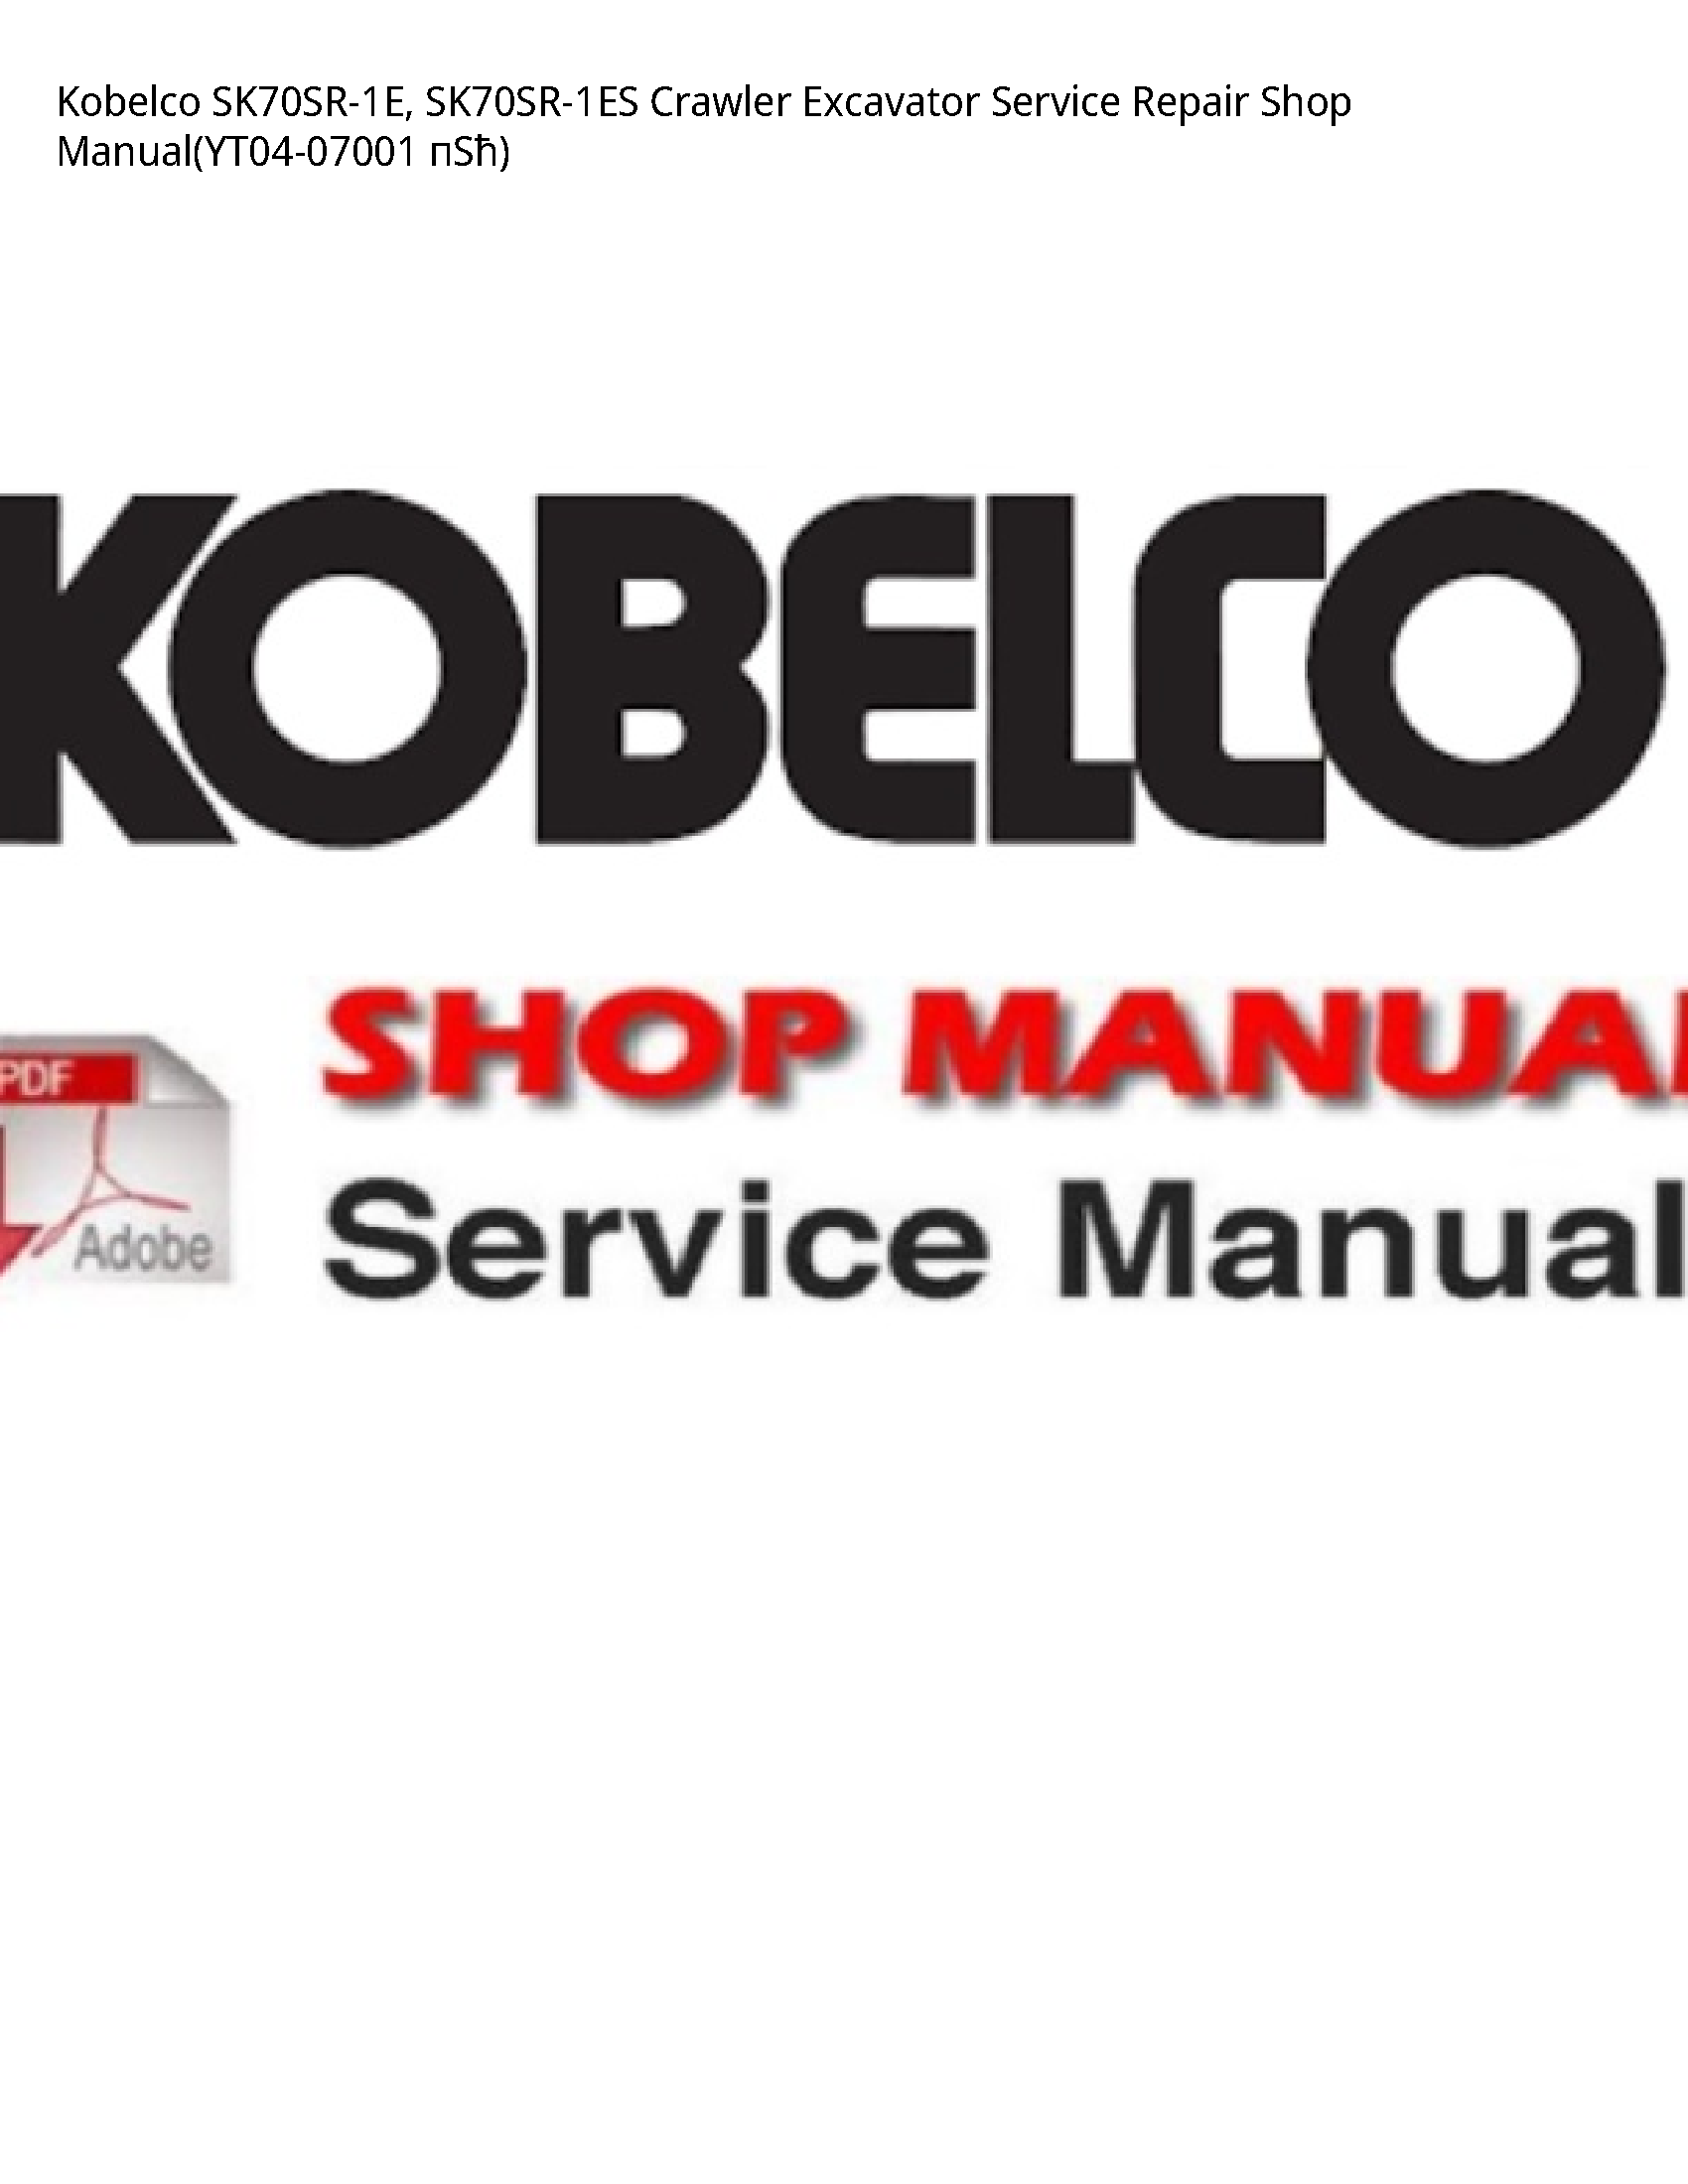 Kobelco SK70SR-1E Crawler Excavator manual